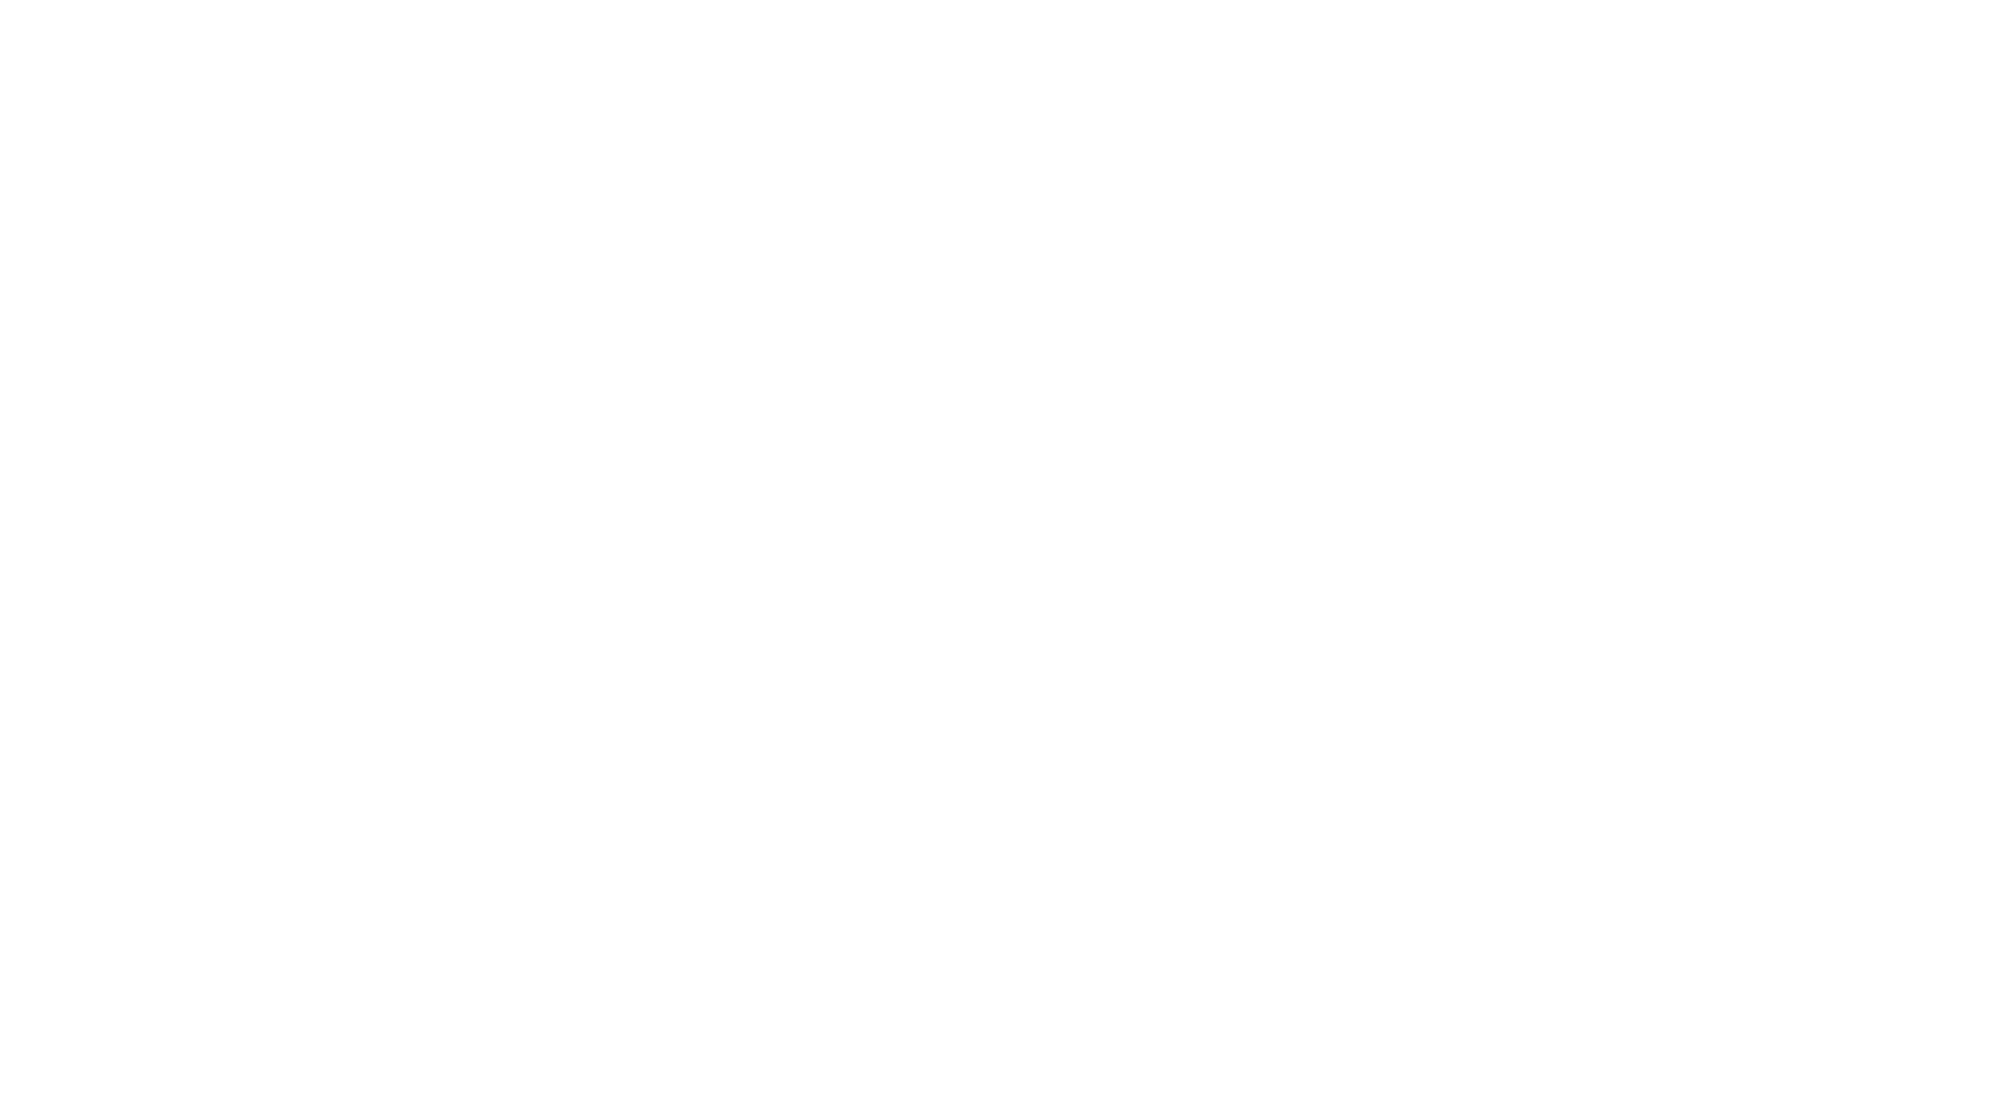 Douglas Ramanery Fotografias